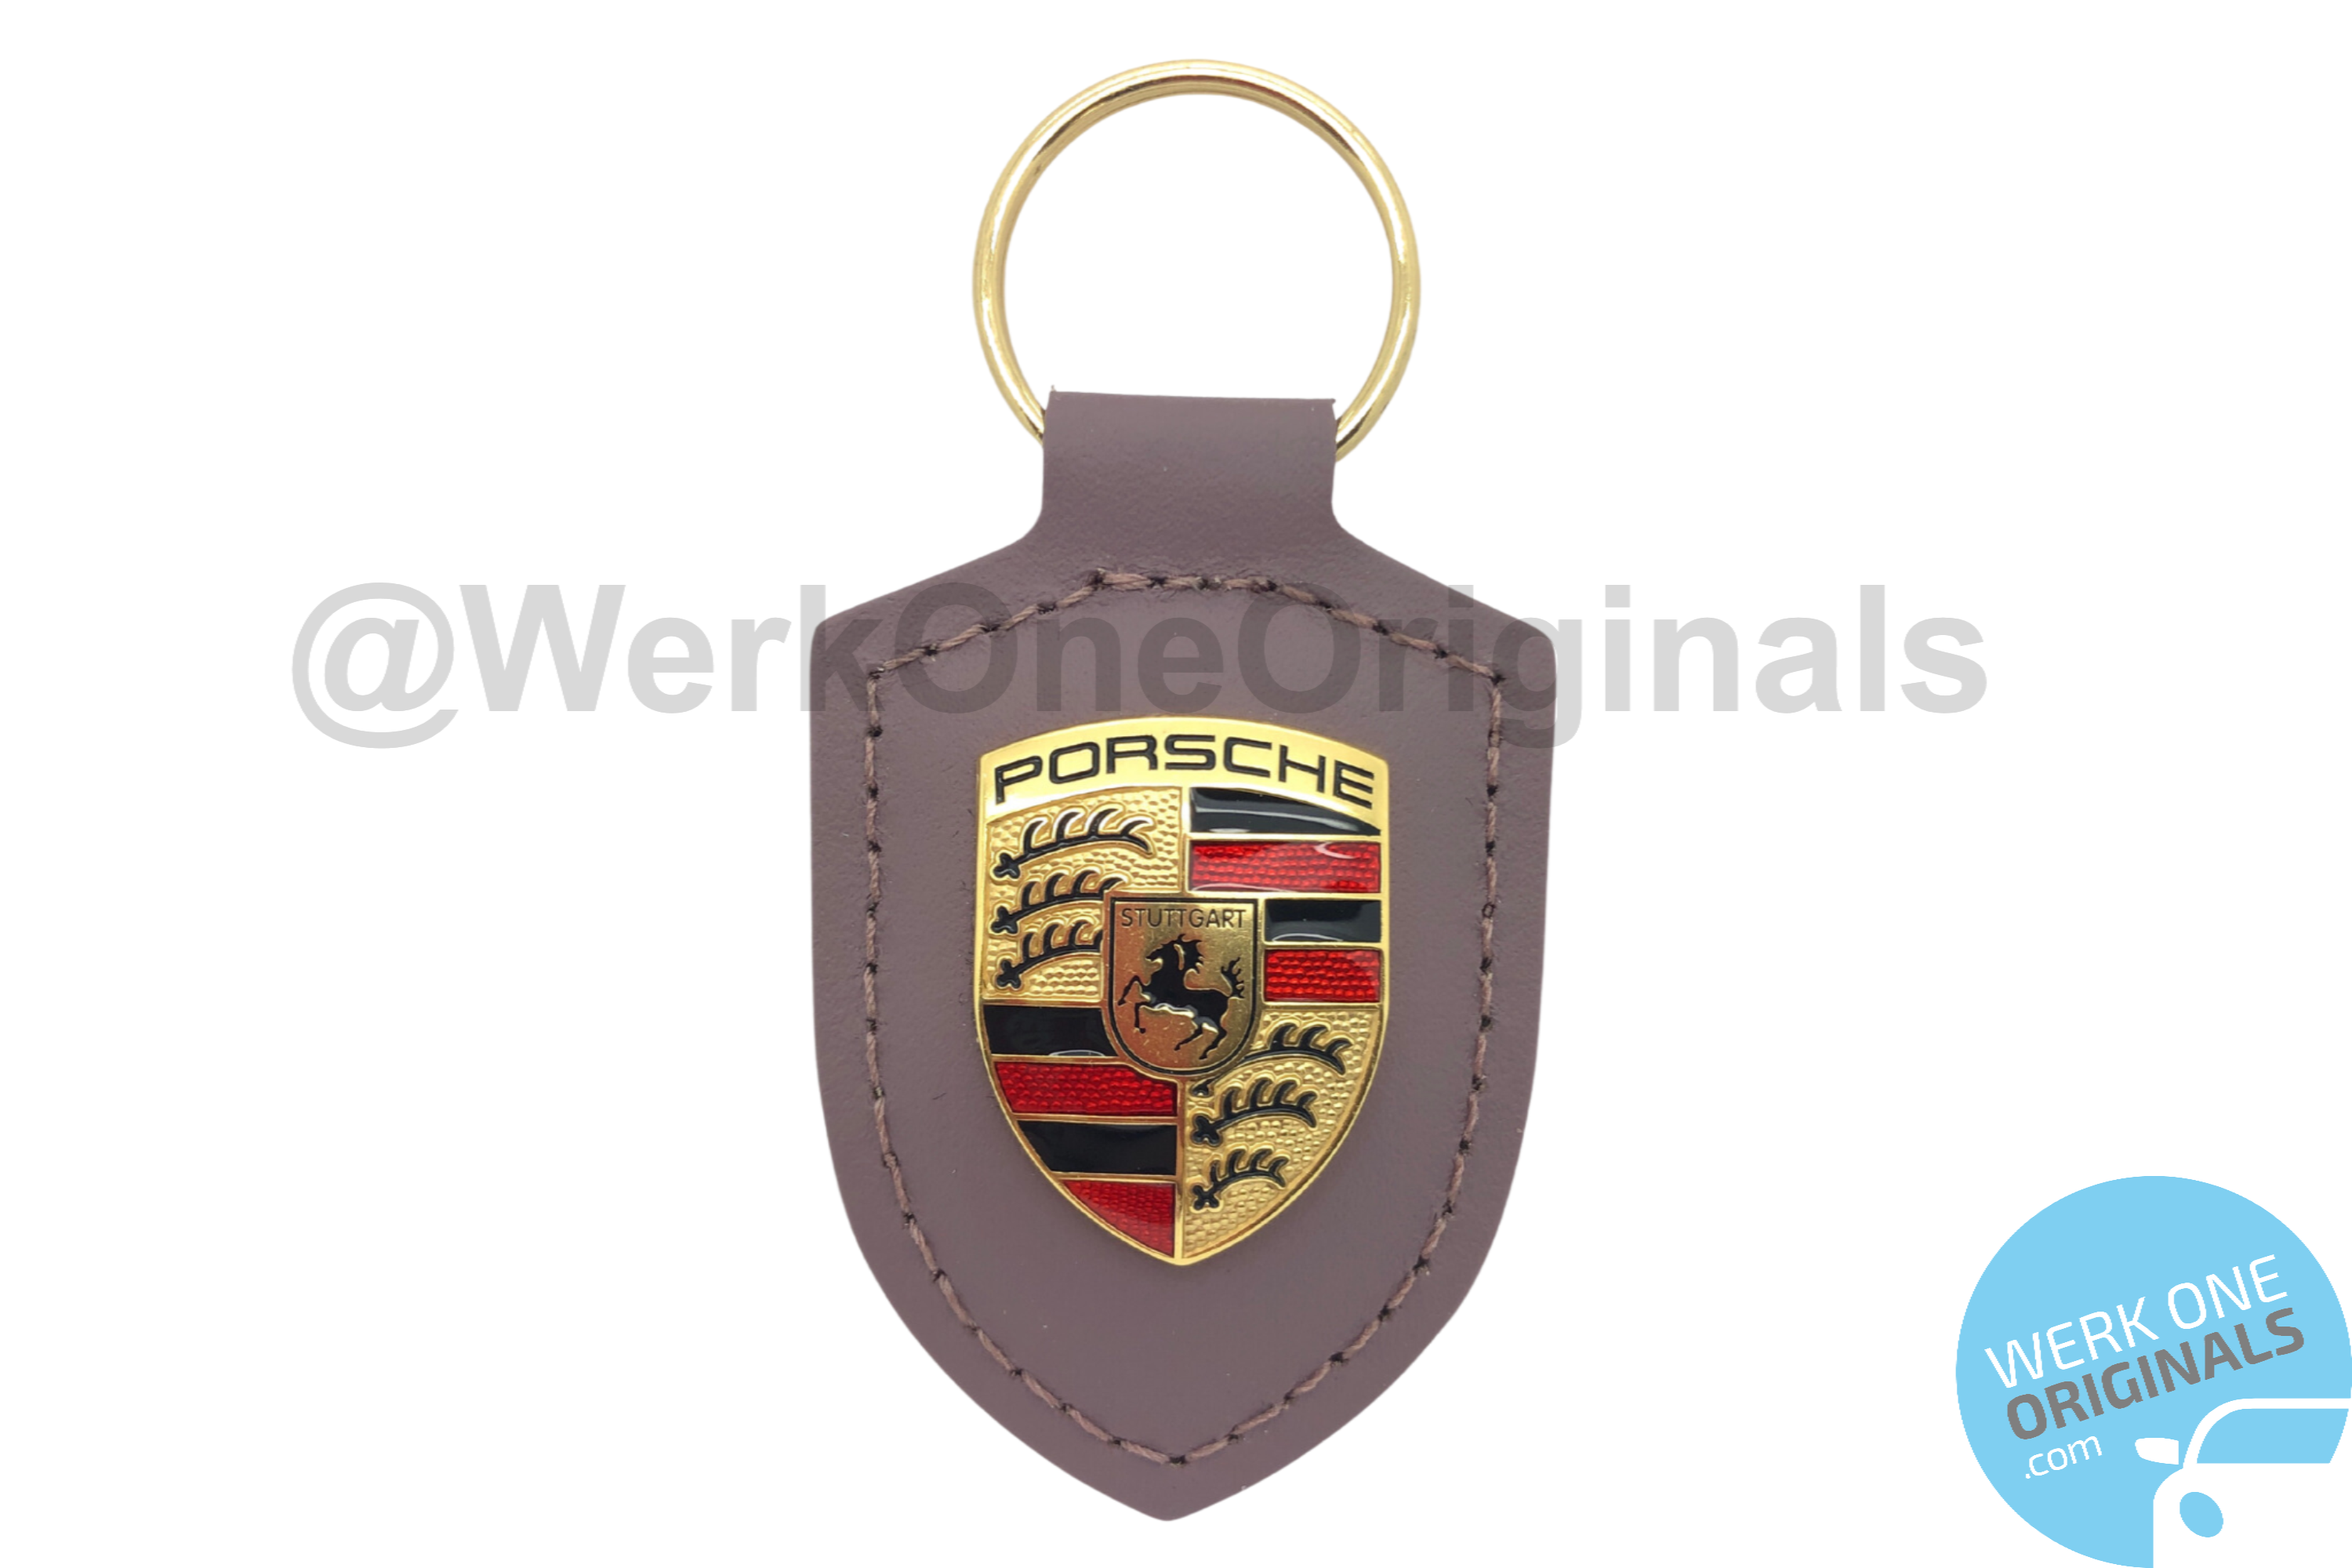 Porsche Official Crest Keyfob in Frozen Berry Metallic